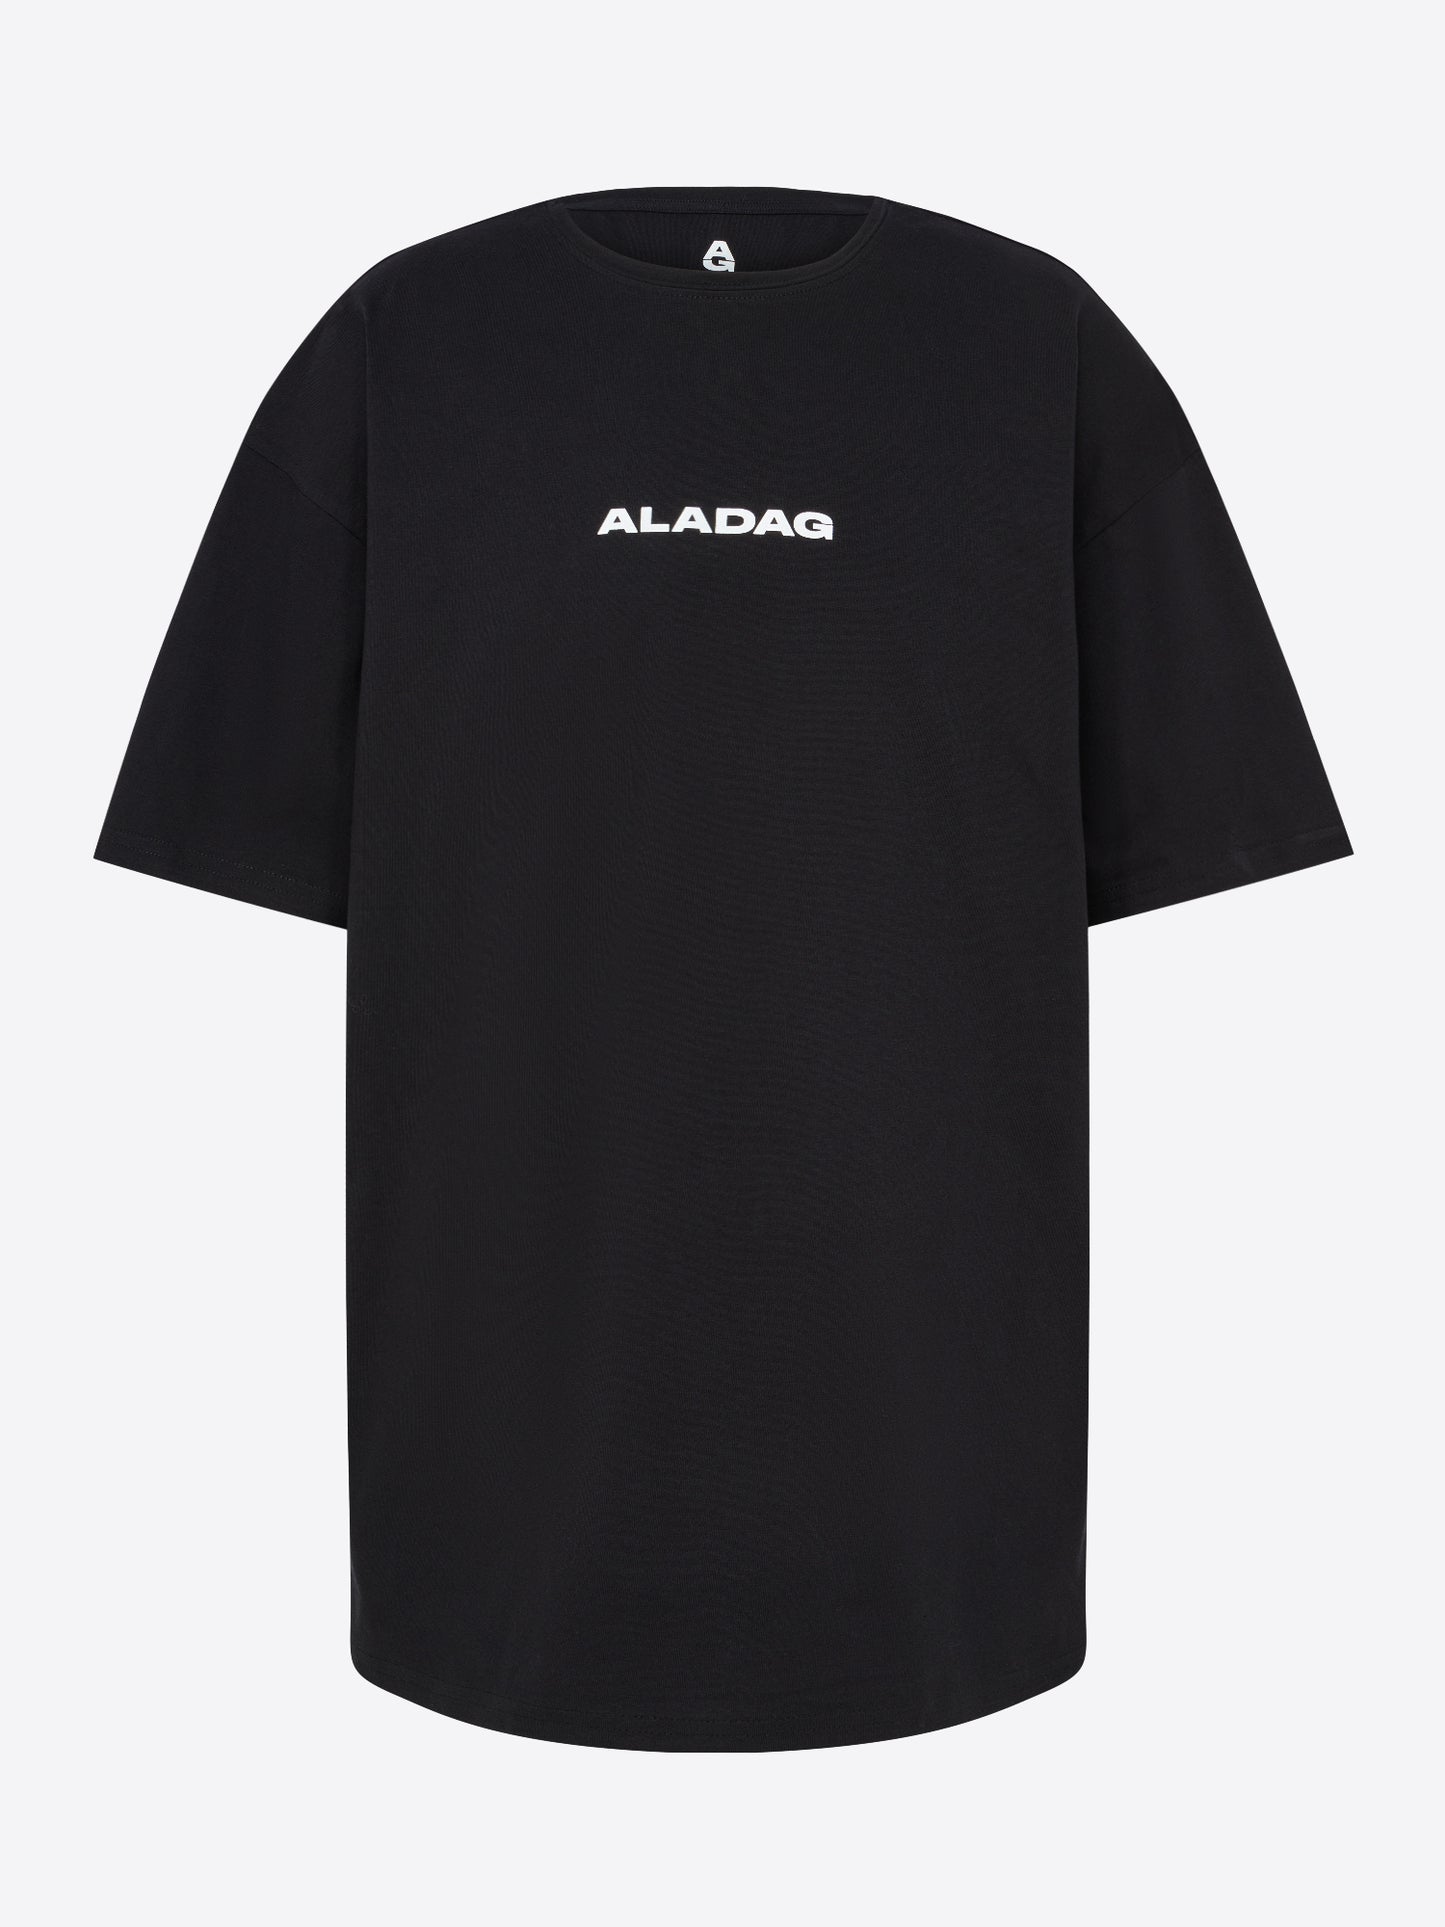 Limited ALADAG - MY RELIGION - Shirt Black